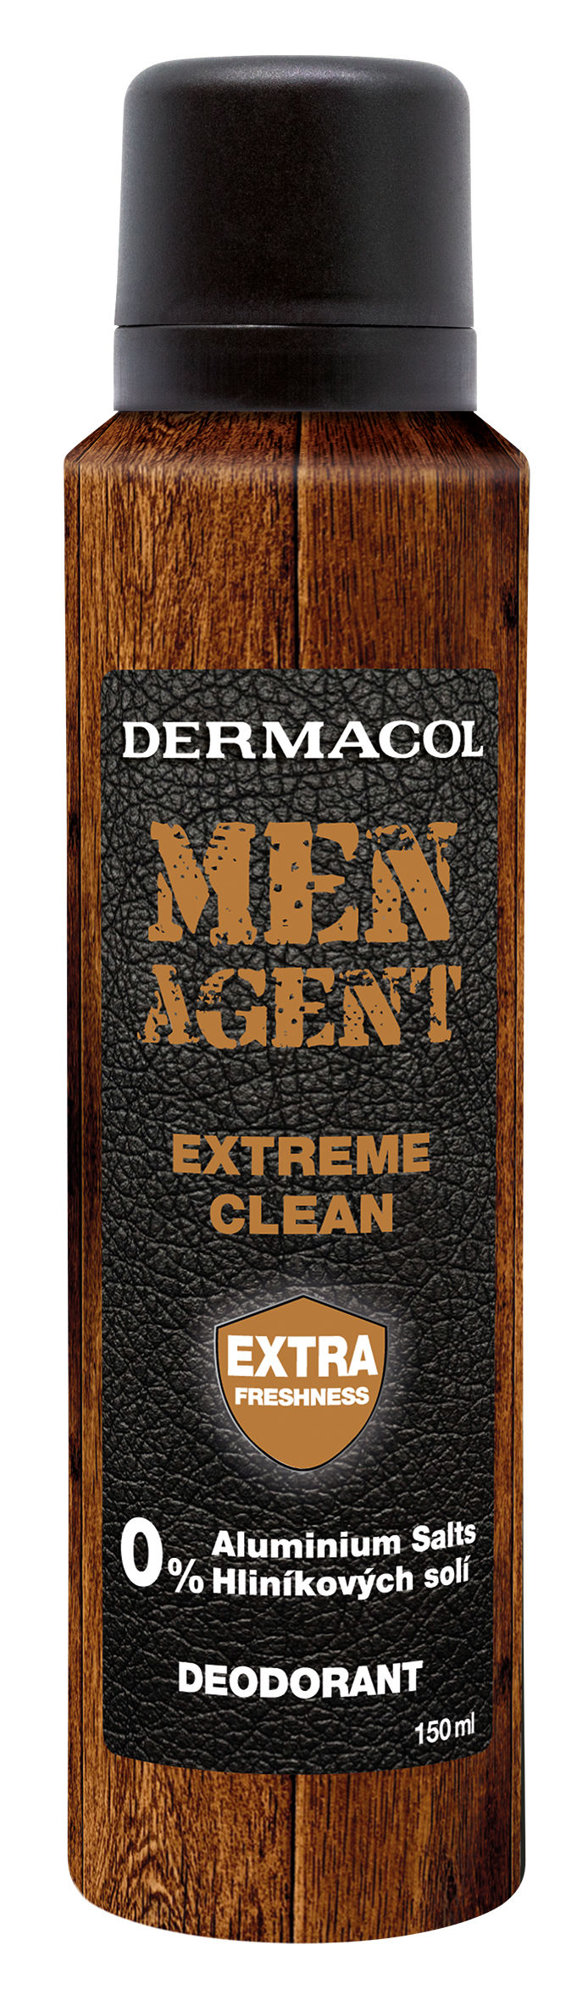 Dermacol Men Agent Extreme Clean dezodorantas